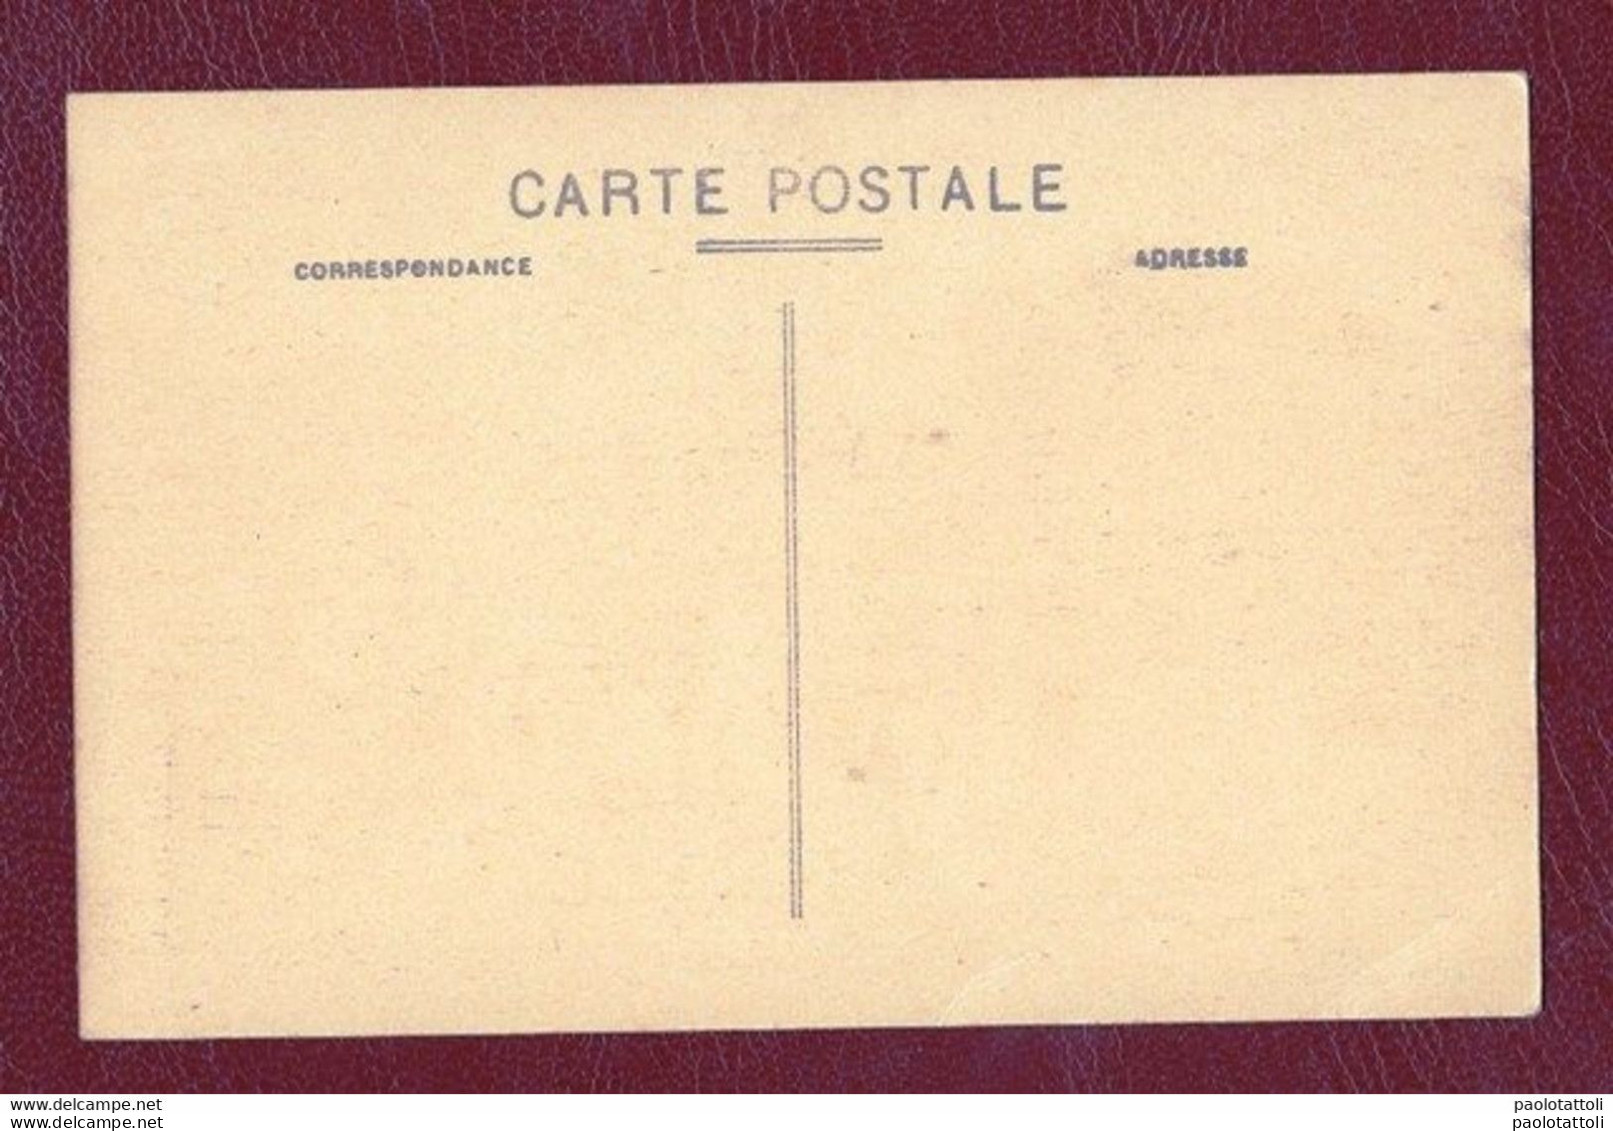 Dakar, Place Protet. New, Verso Divide, Small Size Post Card. Ed. A.Albaret No 57 - Senegal